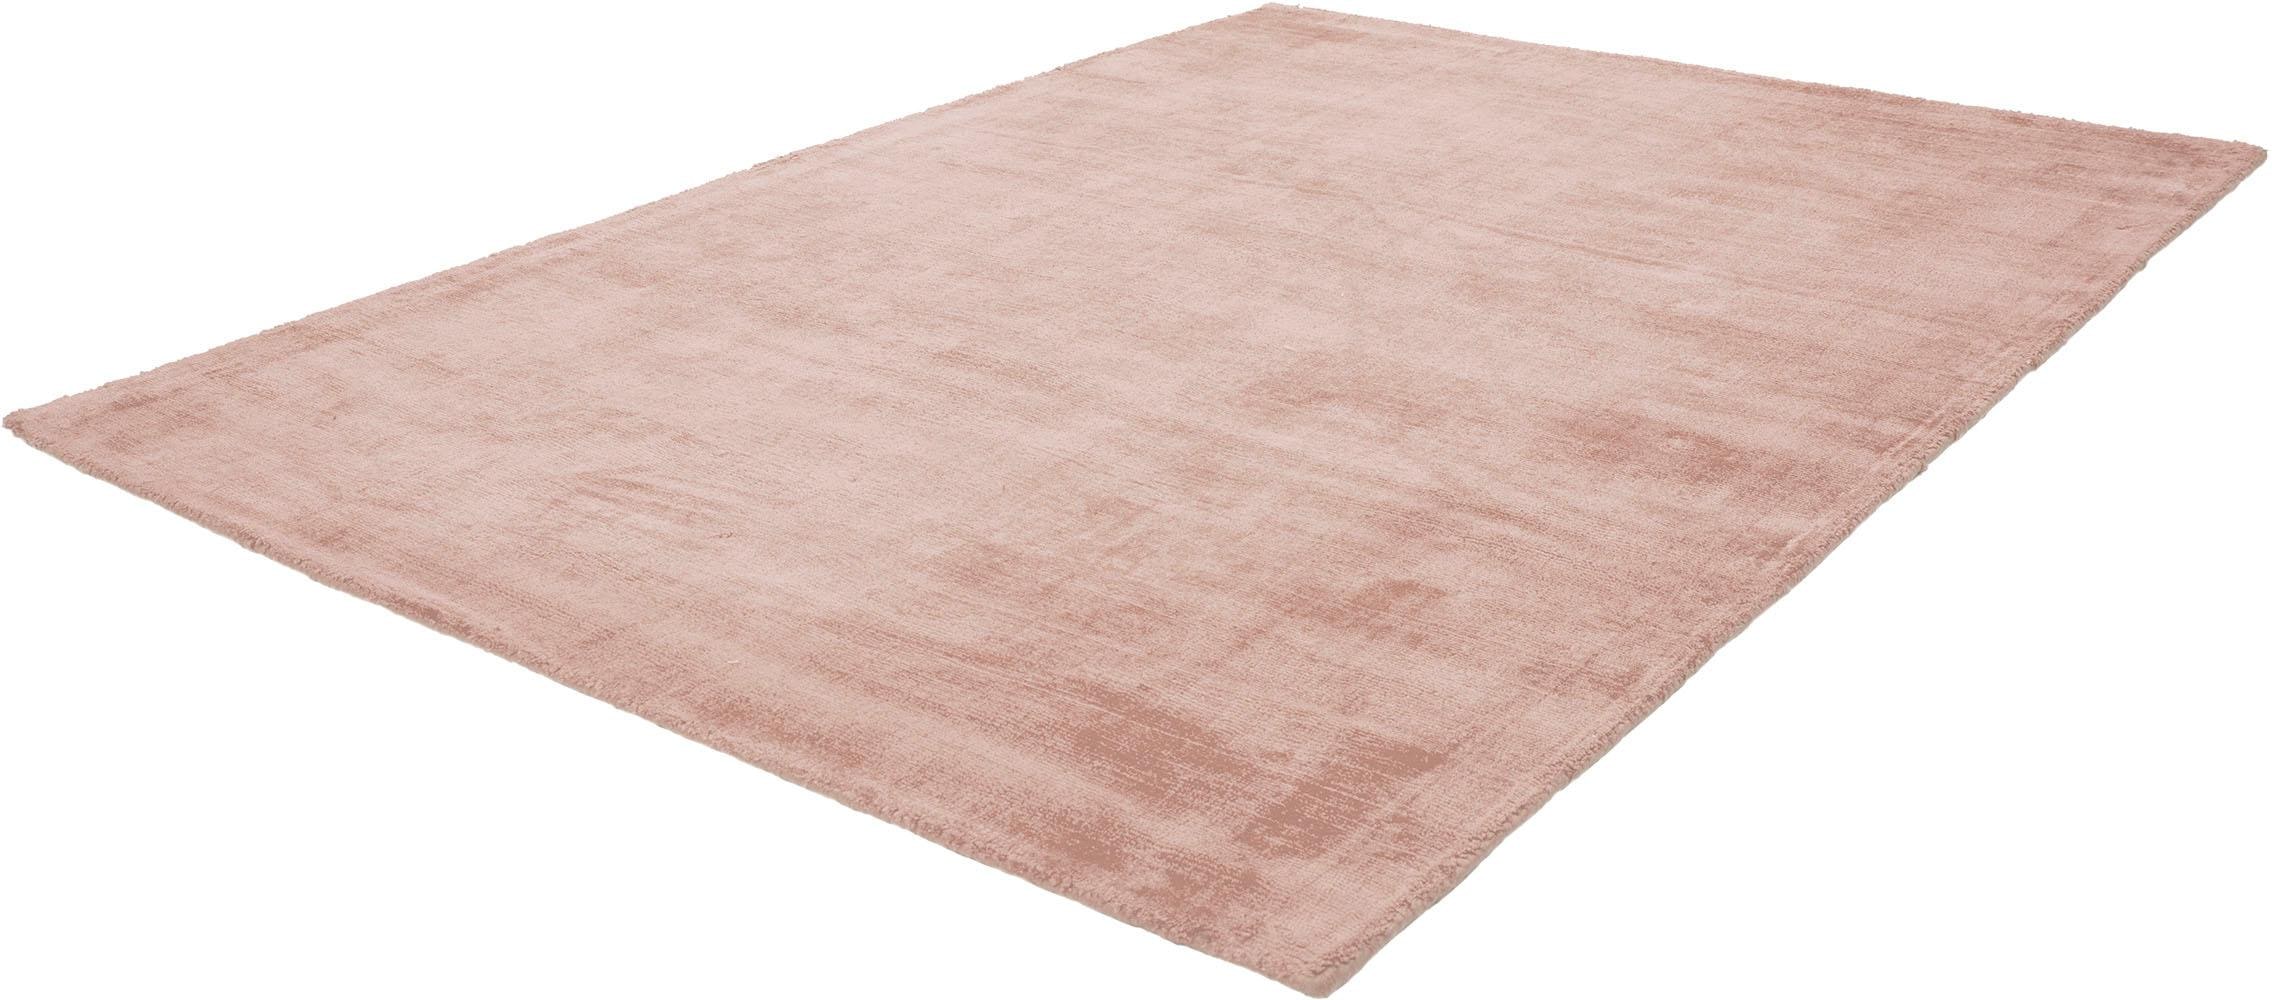 Teppich »My Maori 220«, rechteckig, Uni-Farben, Material: 100% Viskose, handgewebt,...